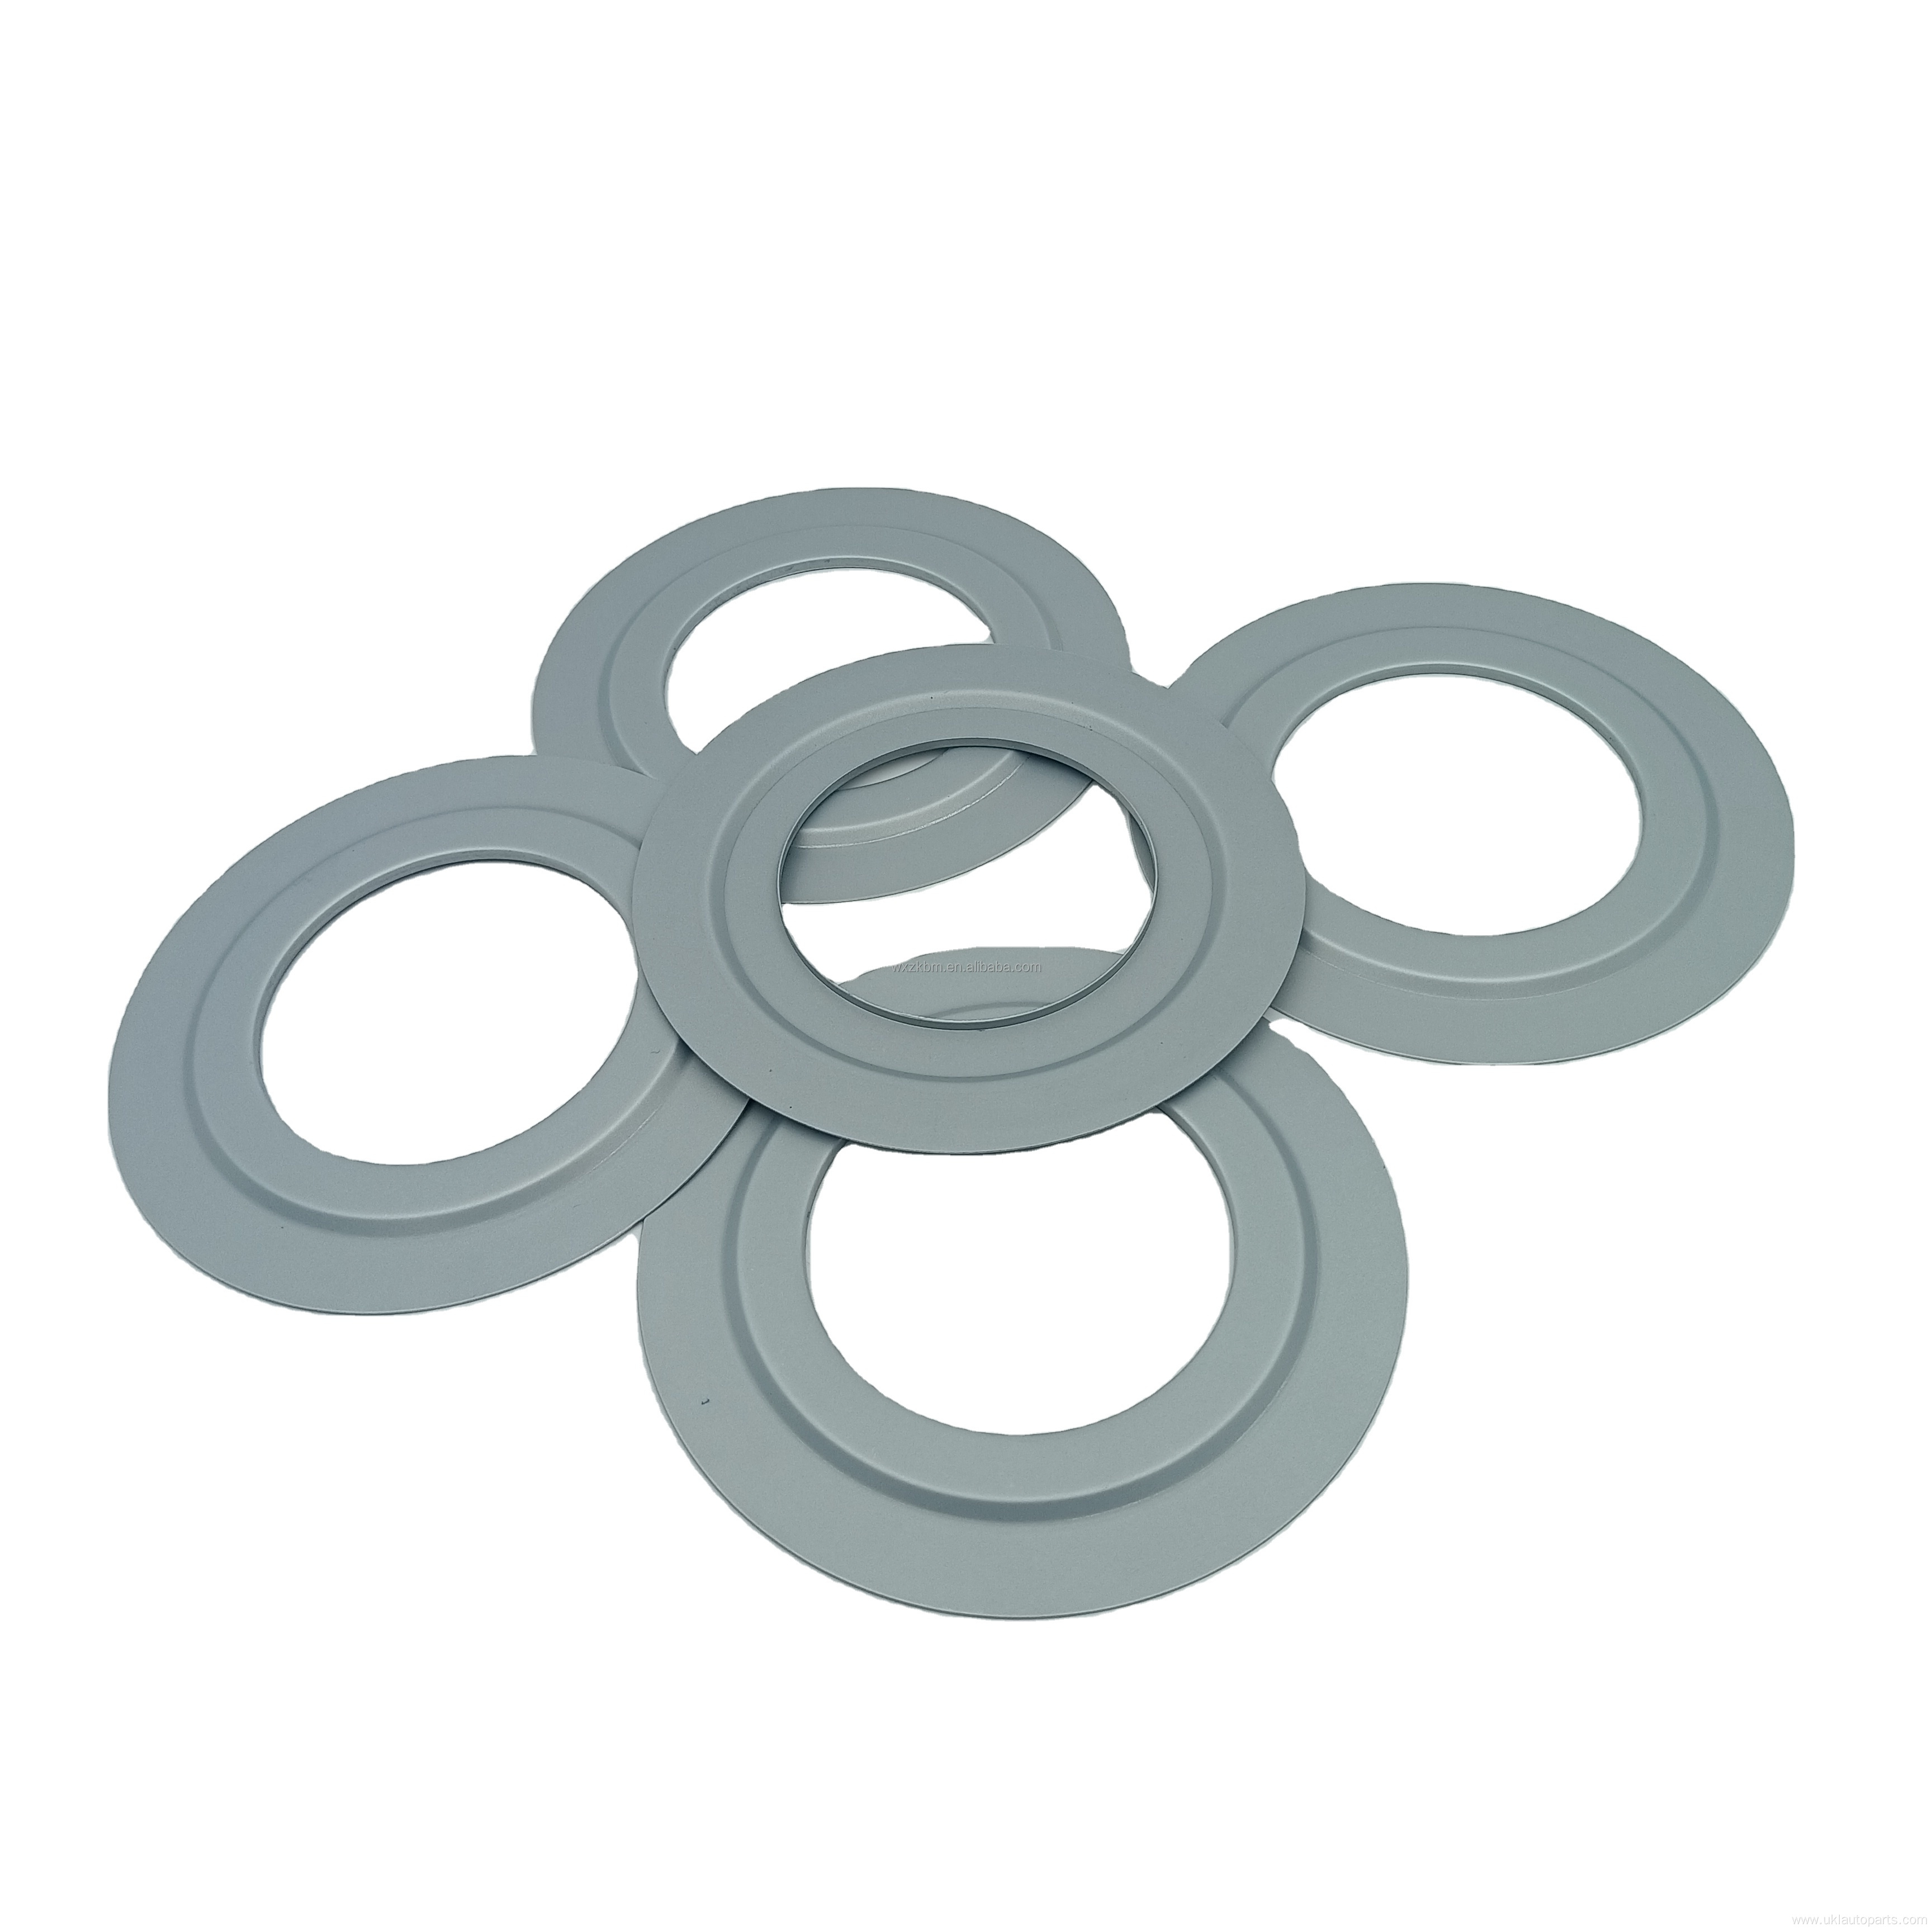 NILOS-Spacer-Ring A35/40/45/50 metal seal